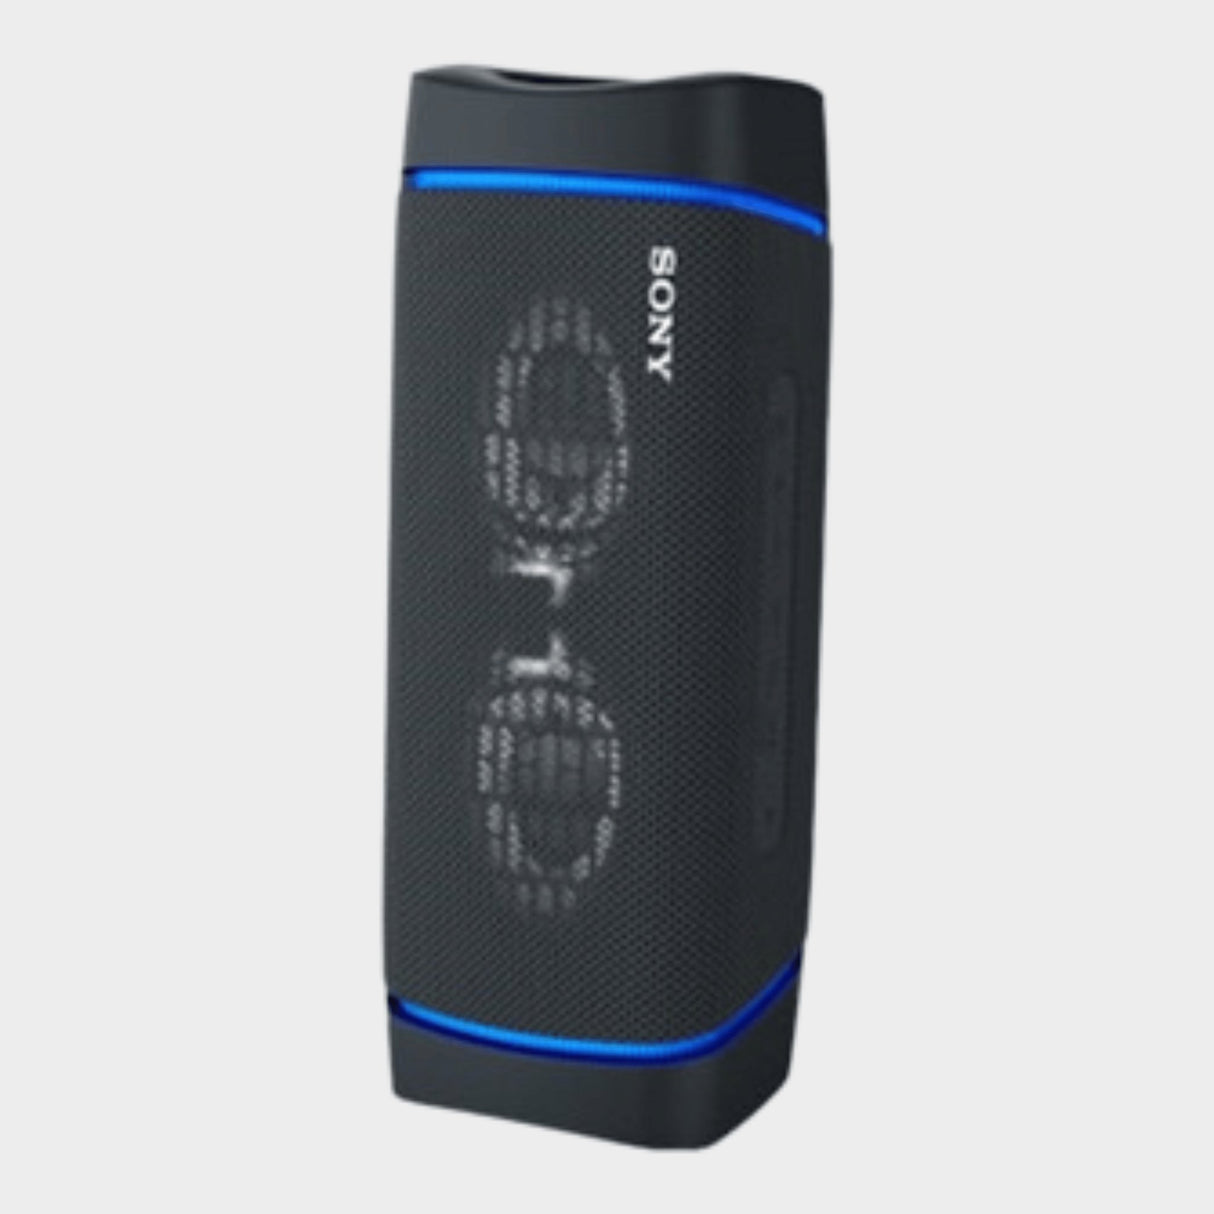 Sony Extra Bass Wireless Portable Speaker, SRS-XB33 - Black - KWT Tech Mart